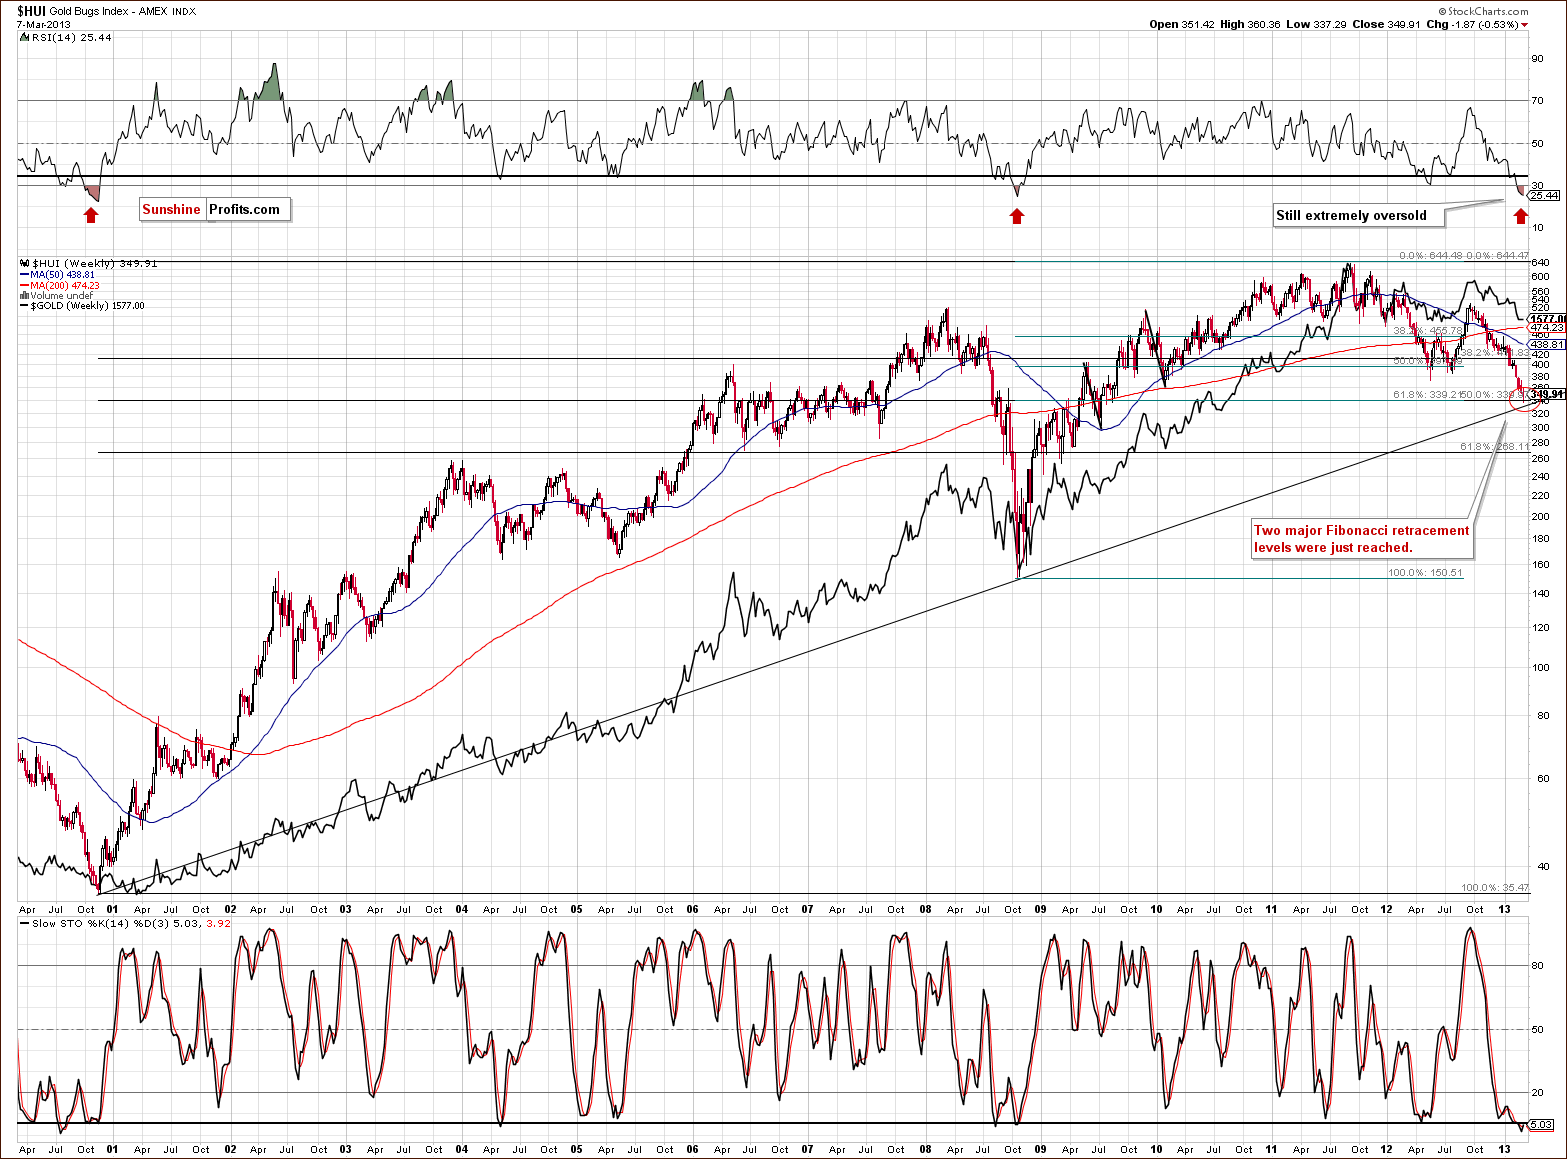 Very long-term HUI Index chart - Gold Bugs, Mining stocks